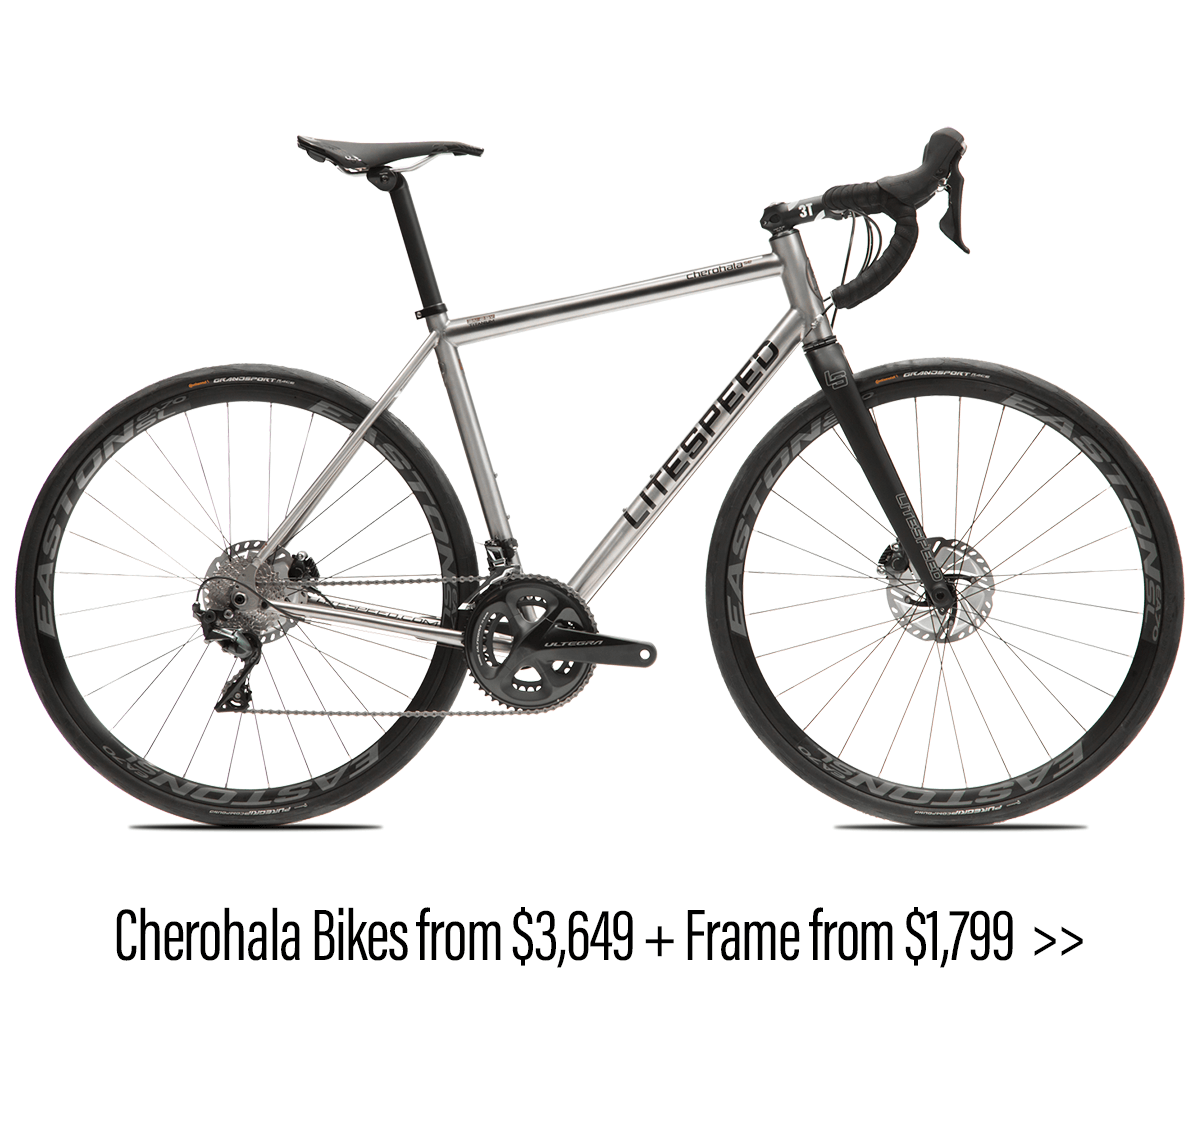 Cherohala bike from $3,649.